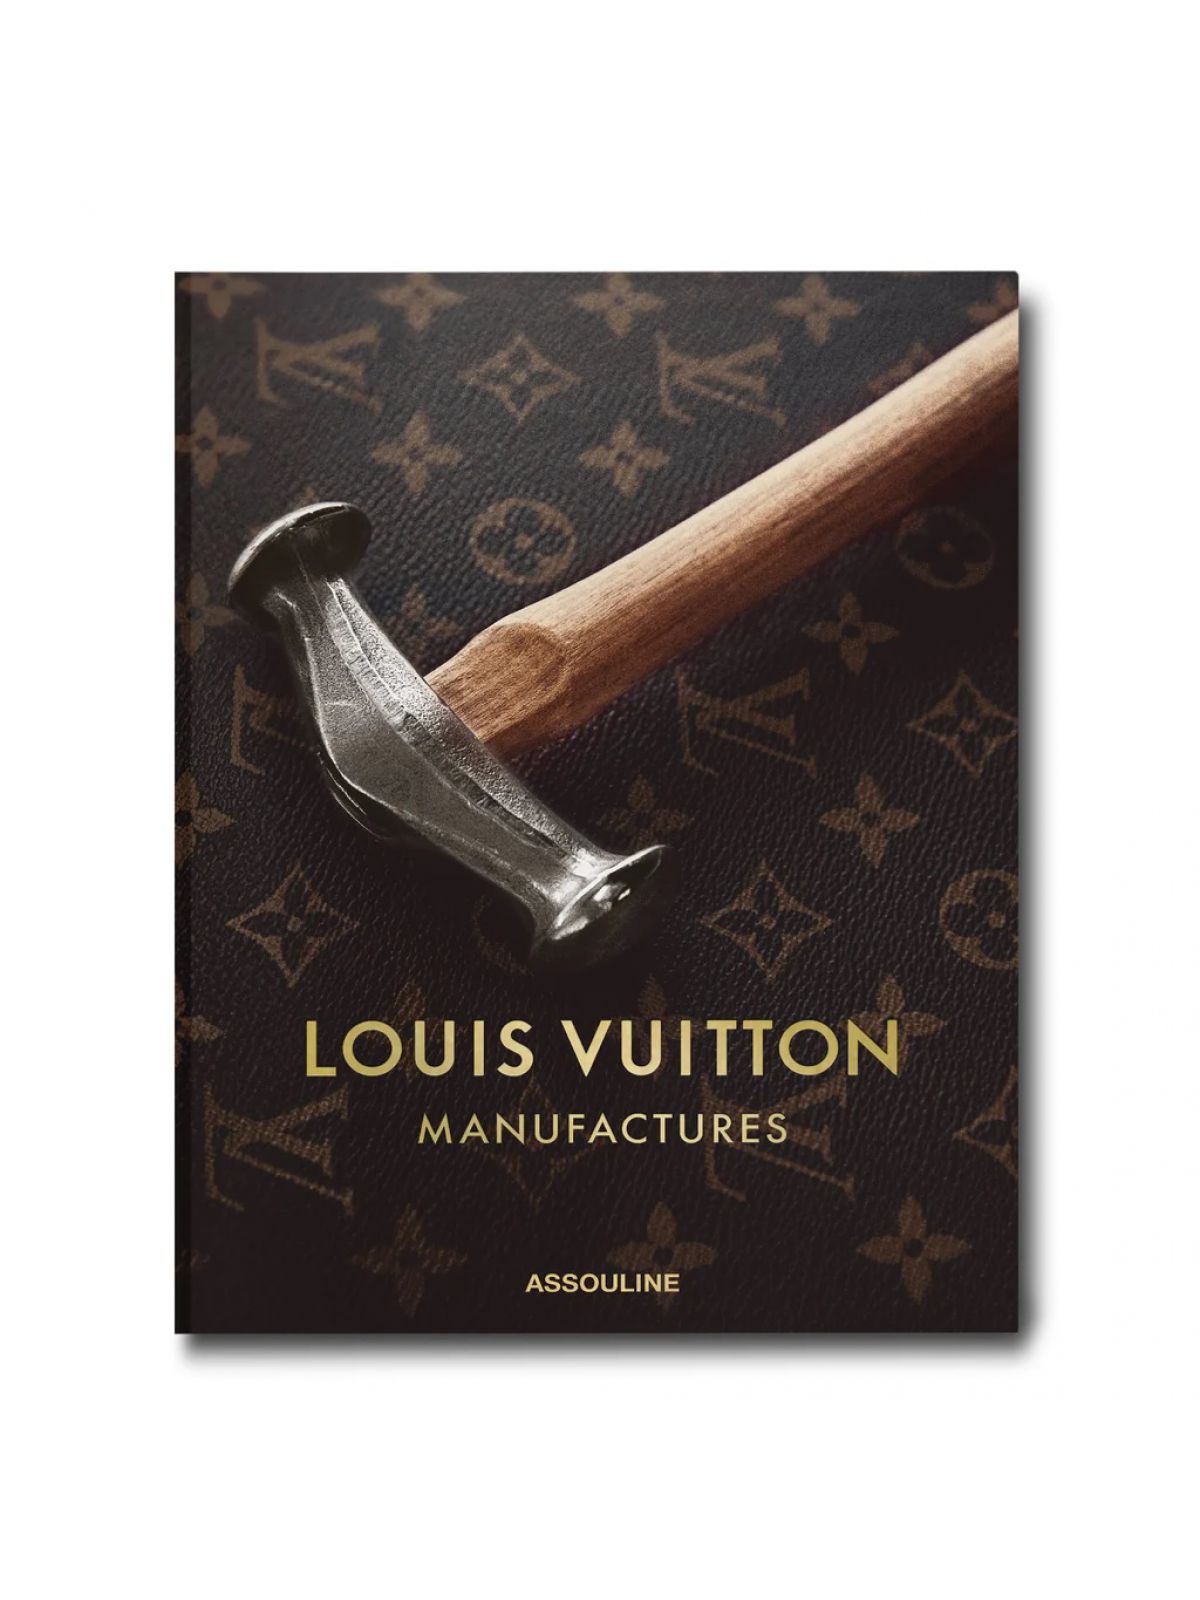 LOUIS VUITTON MANUFACTURES  Купить Книгу на Английском